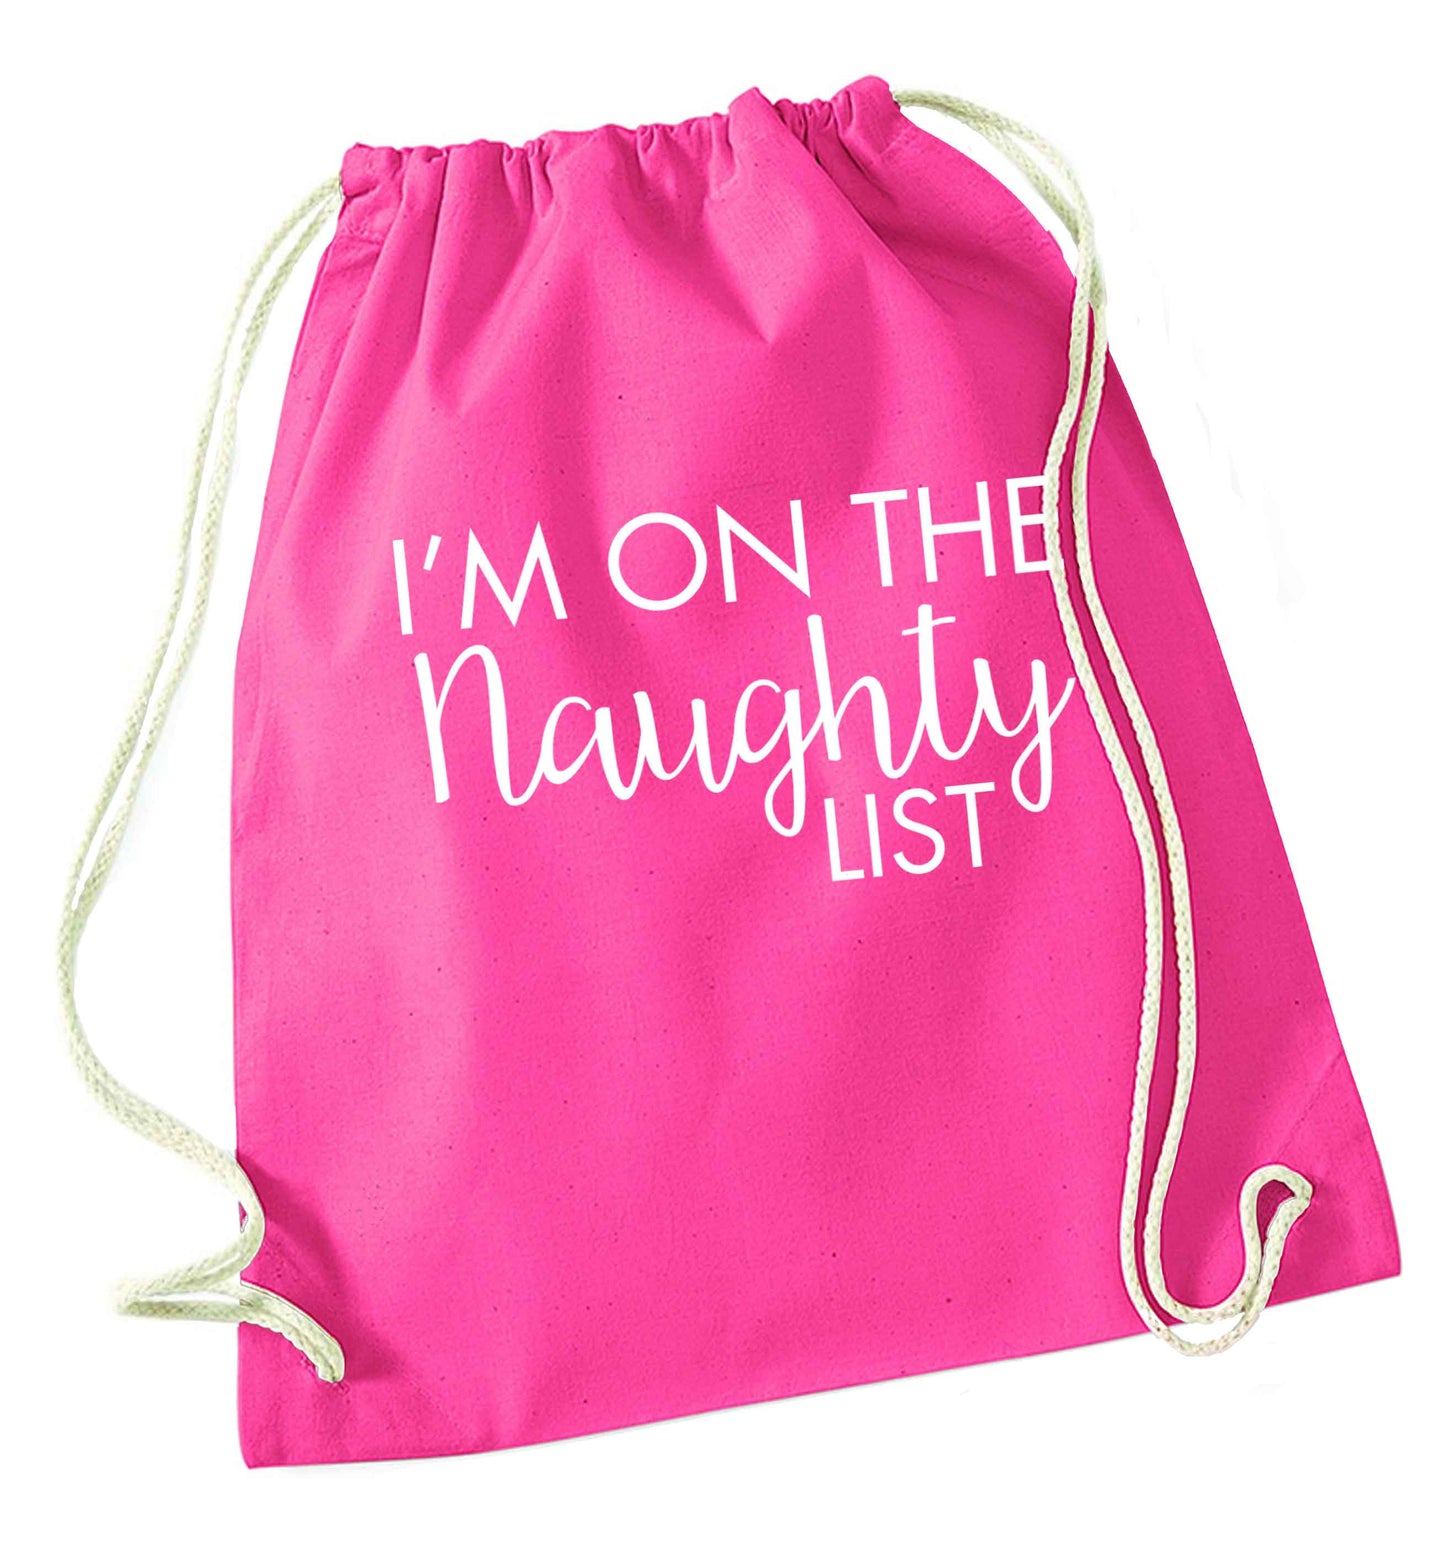 I'm on the naughty list pink drawstring bag